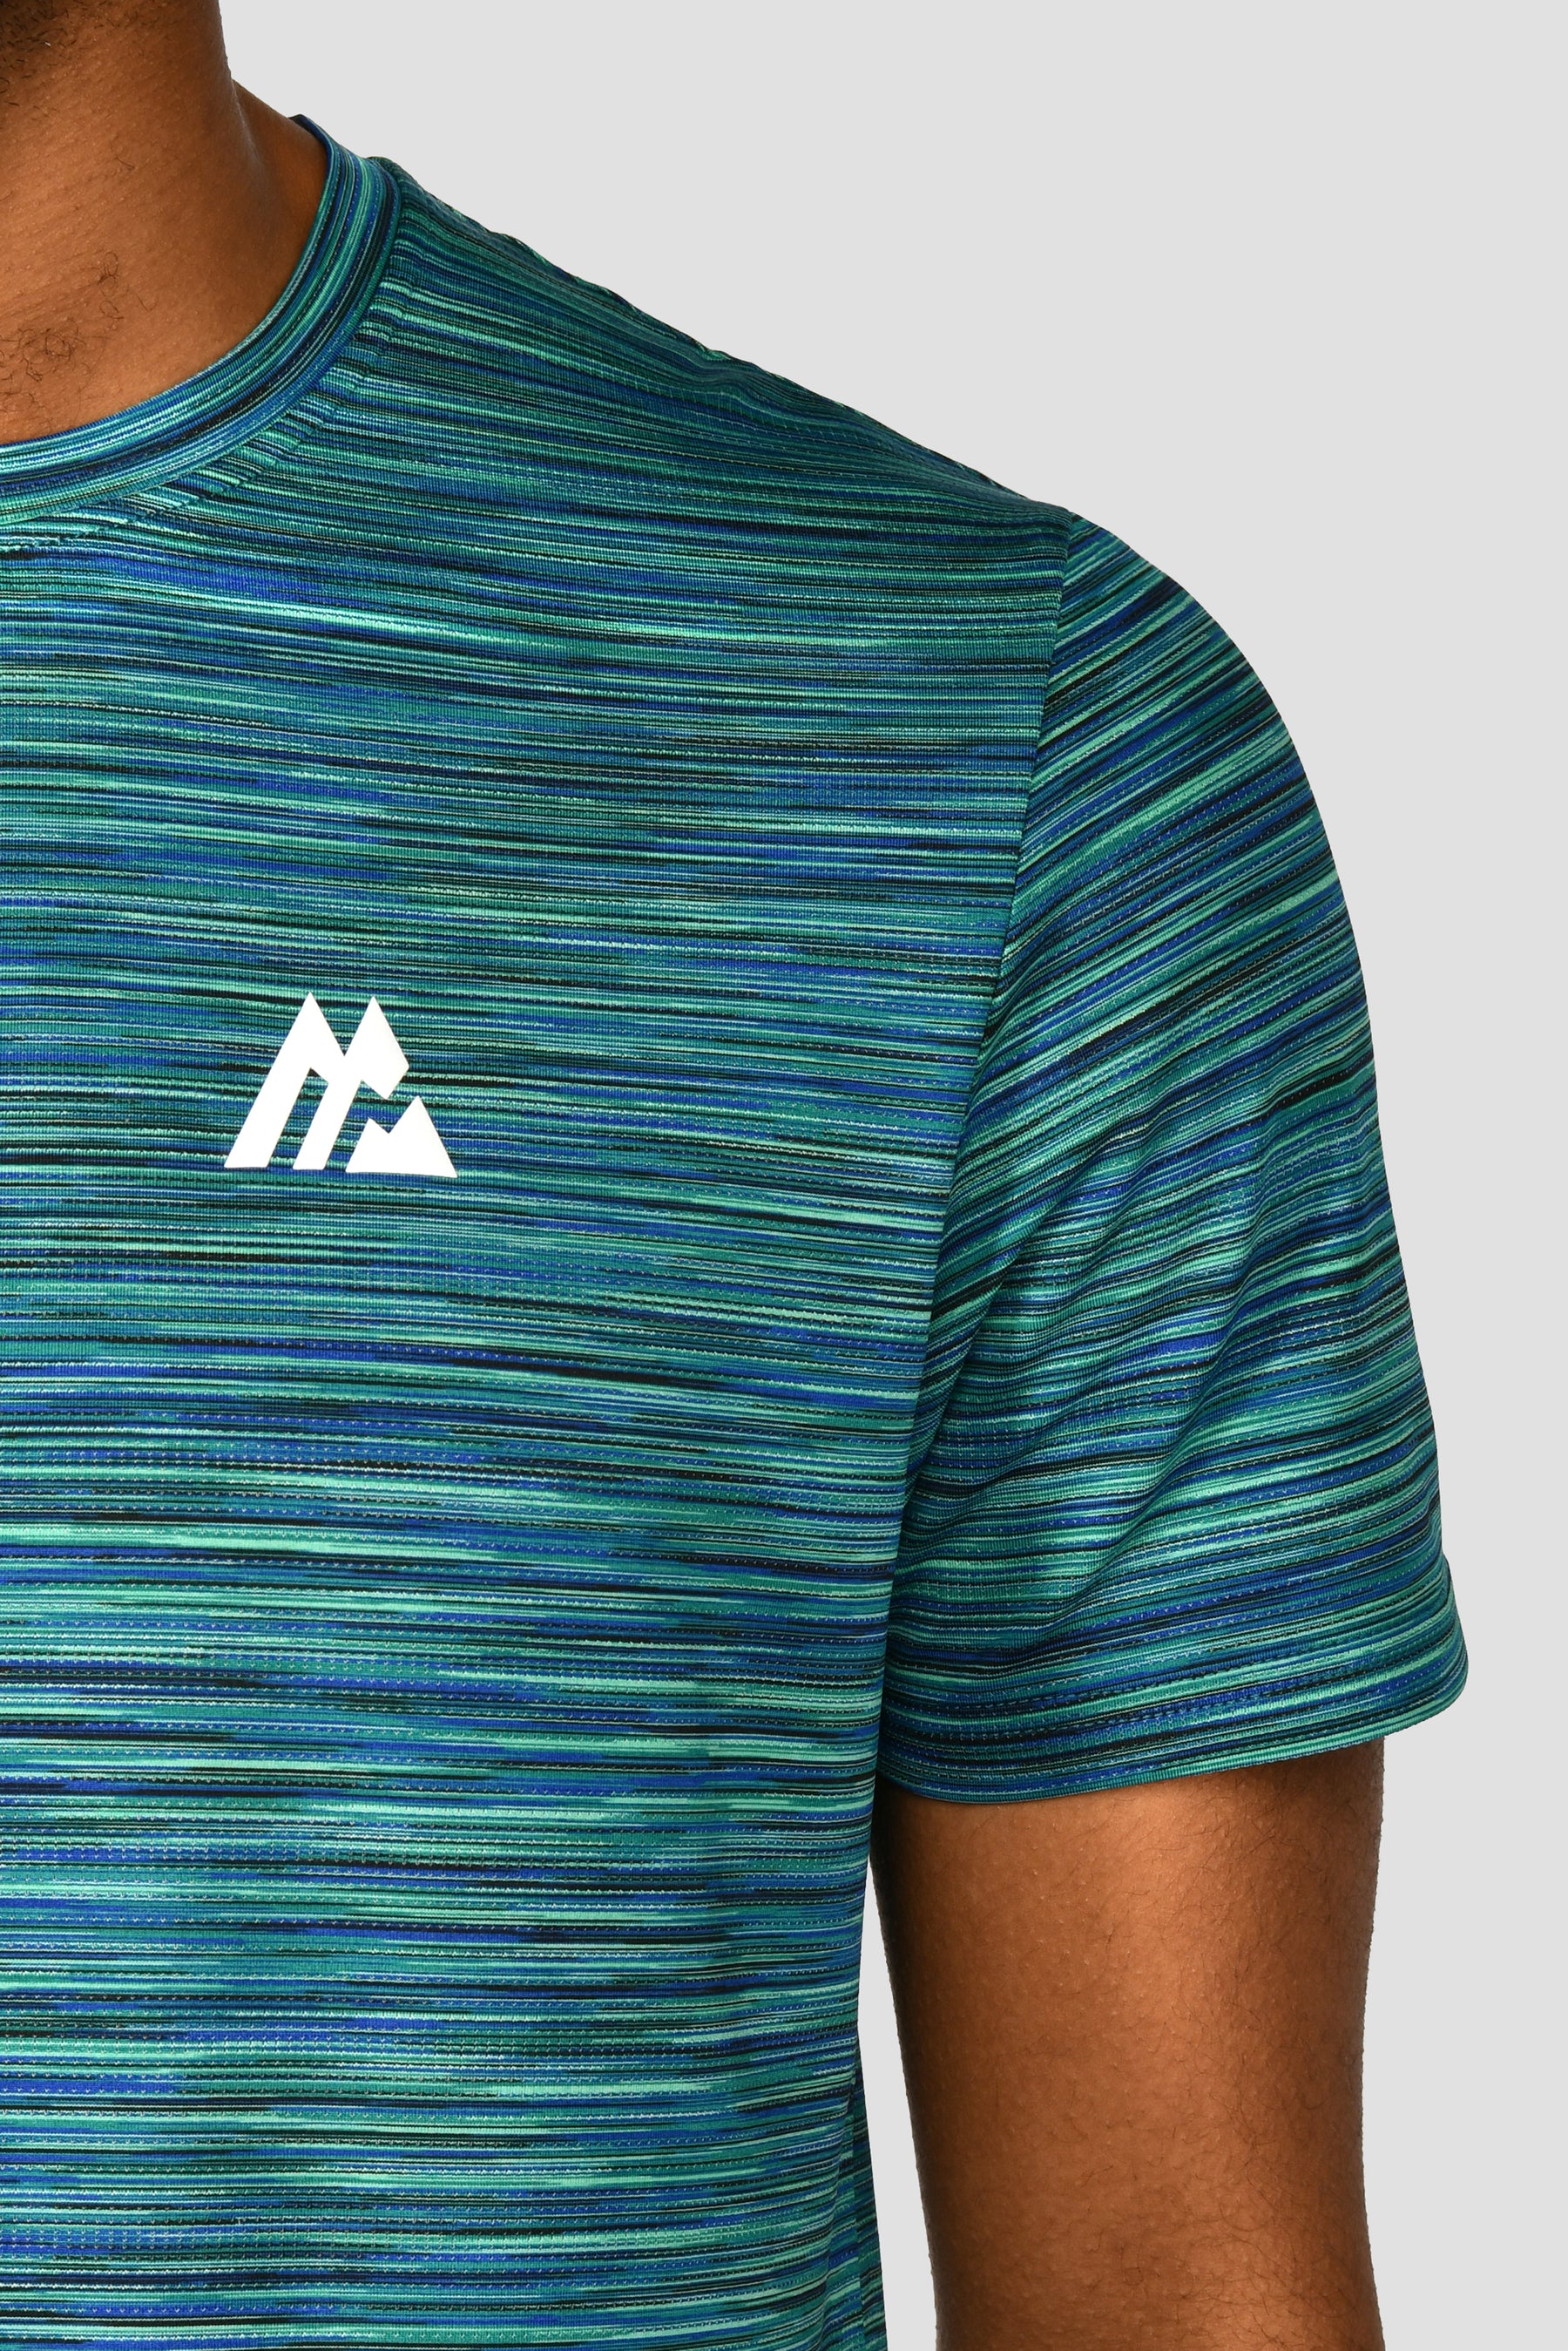 Men's Trail 2.0 T-Shirt - Navy/Turquoise/Green